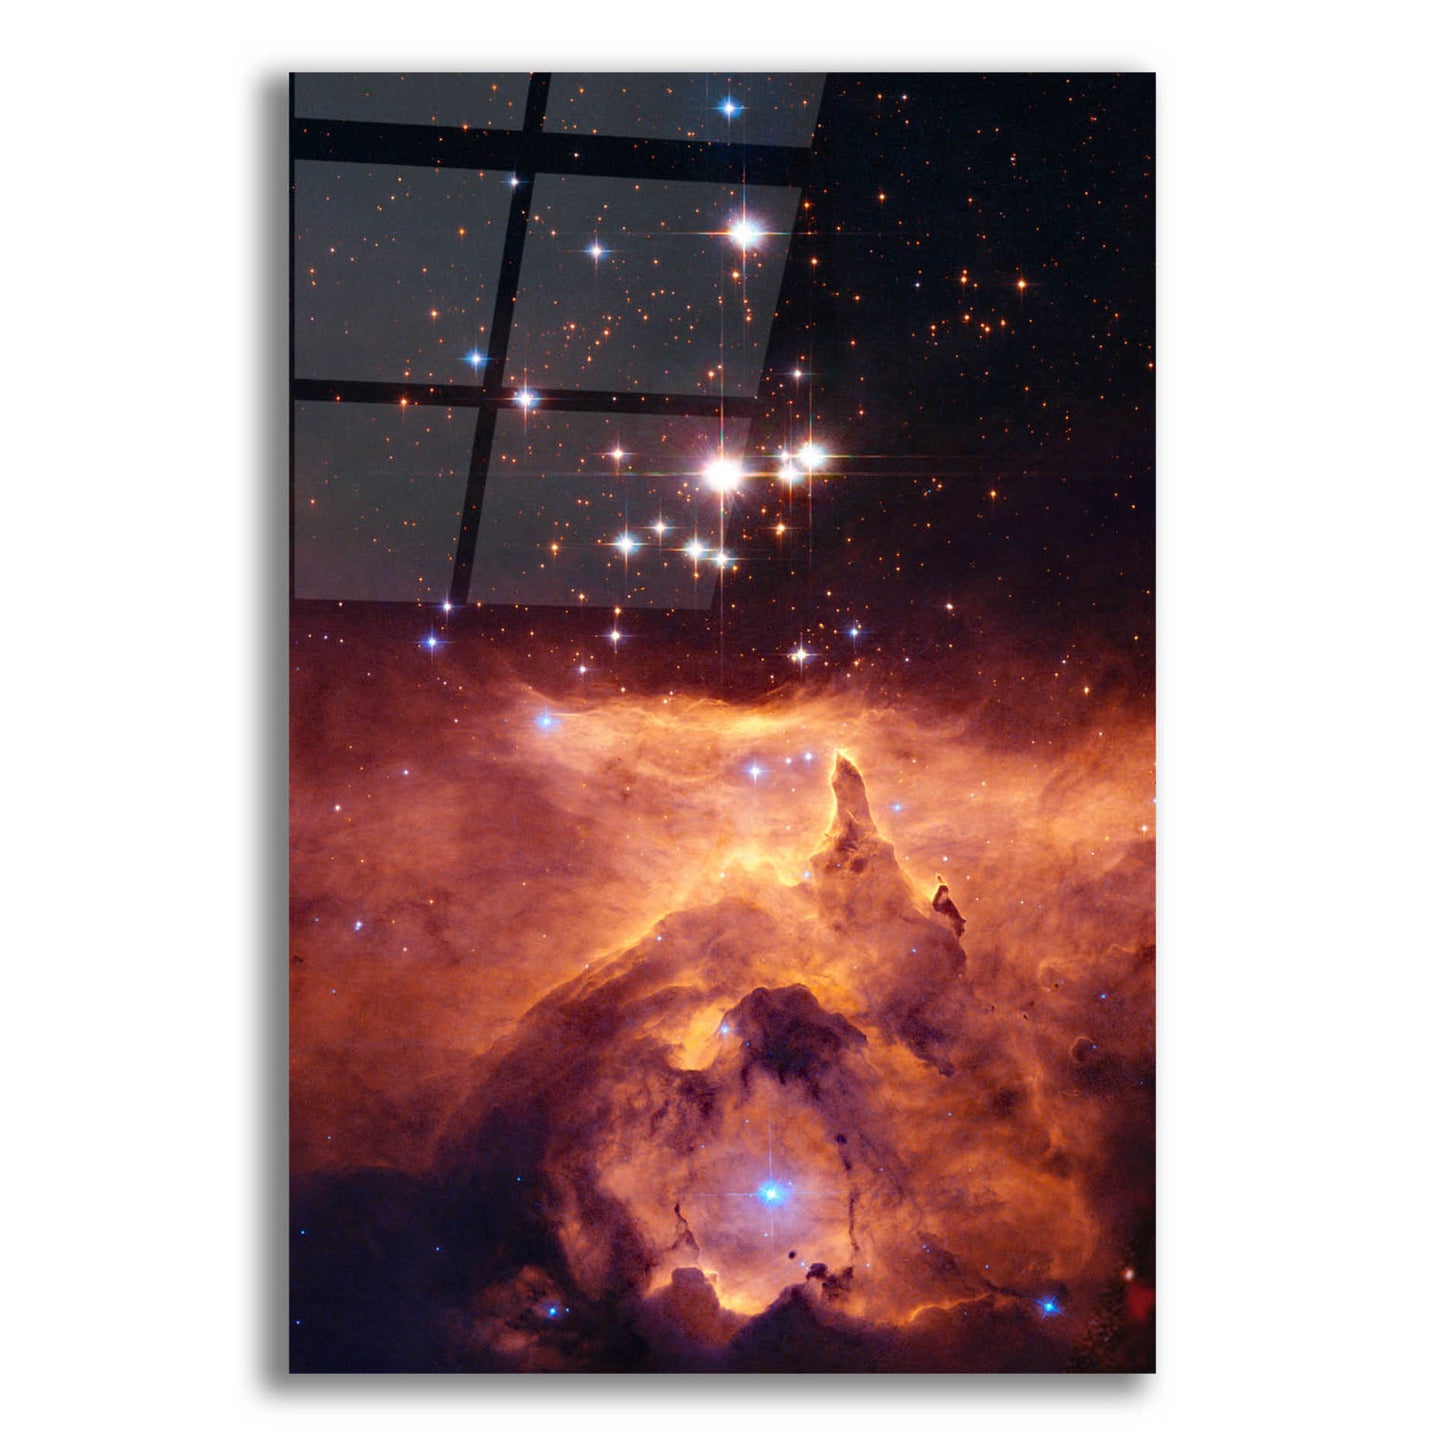 Epic Art 'Star Crossed' Hubble Space Telescope, Acrylic Glass Wall Art,12x16